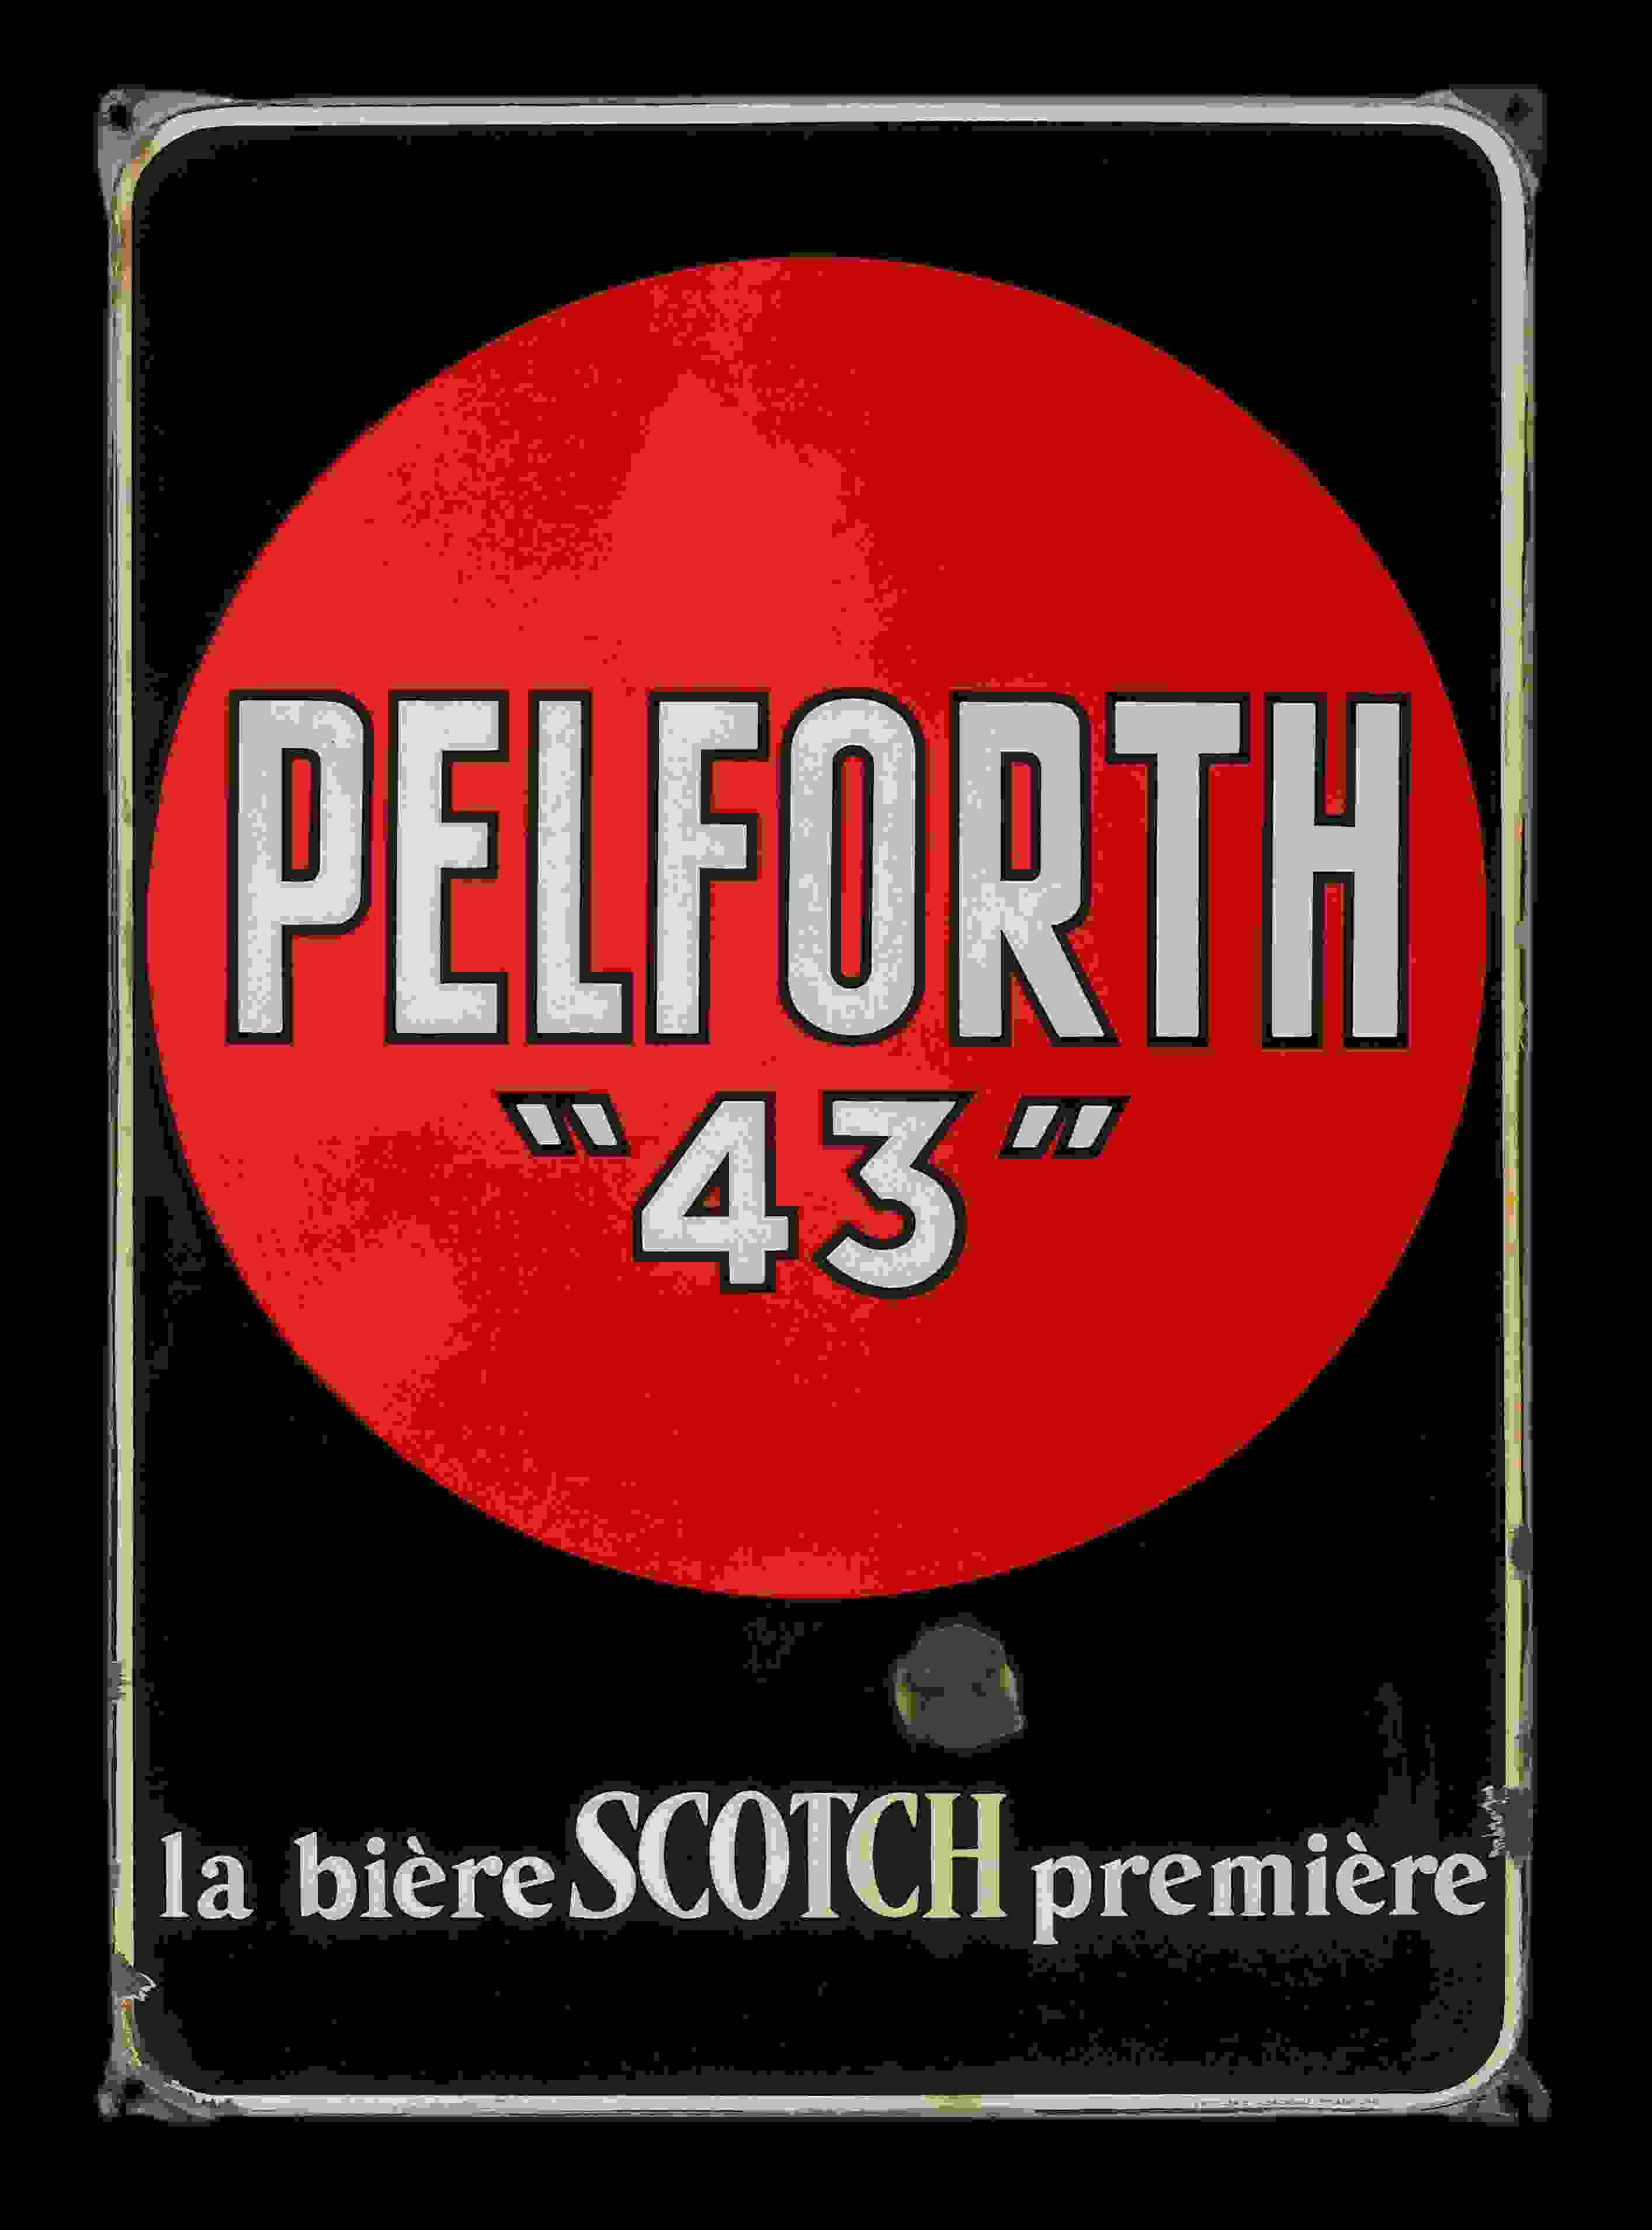 Pelforth "43" la bière Scotch 